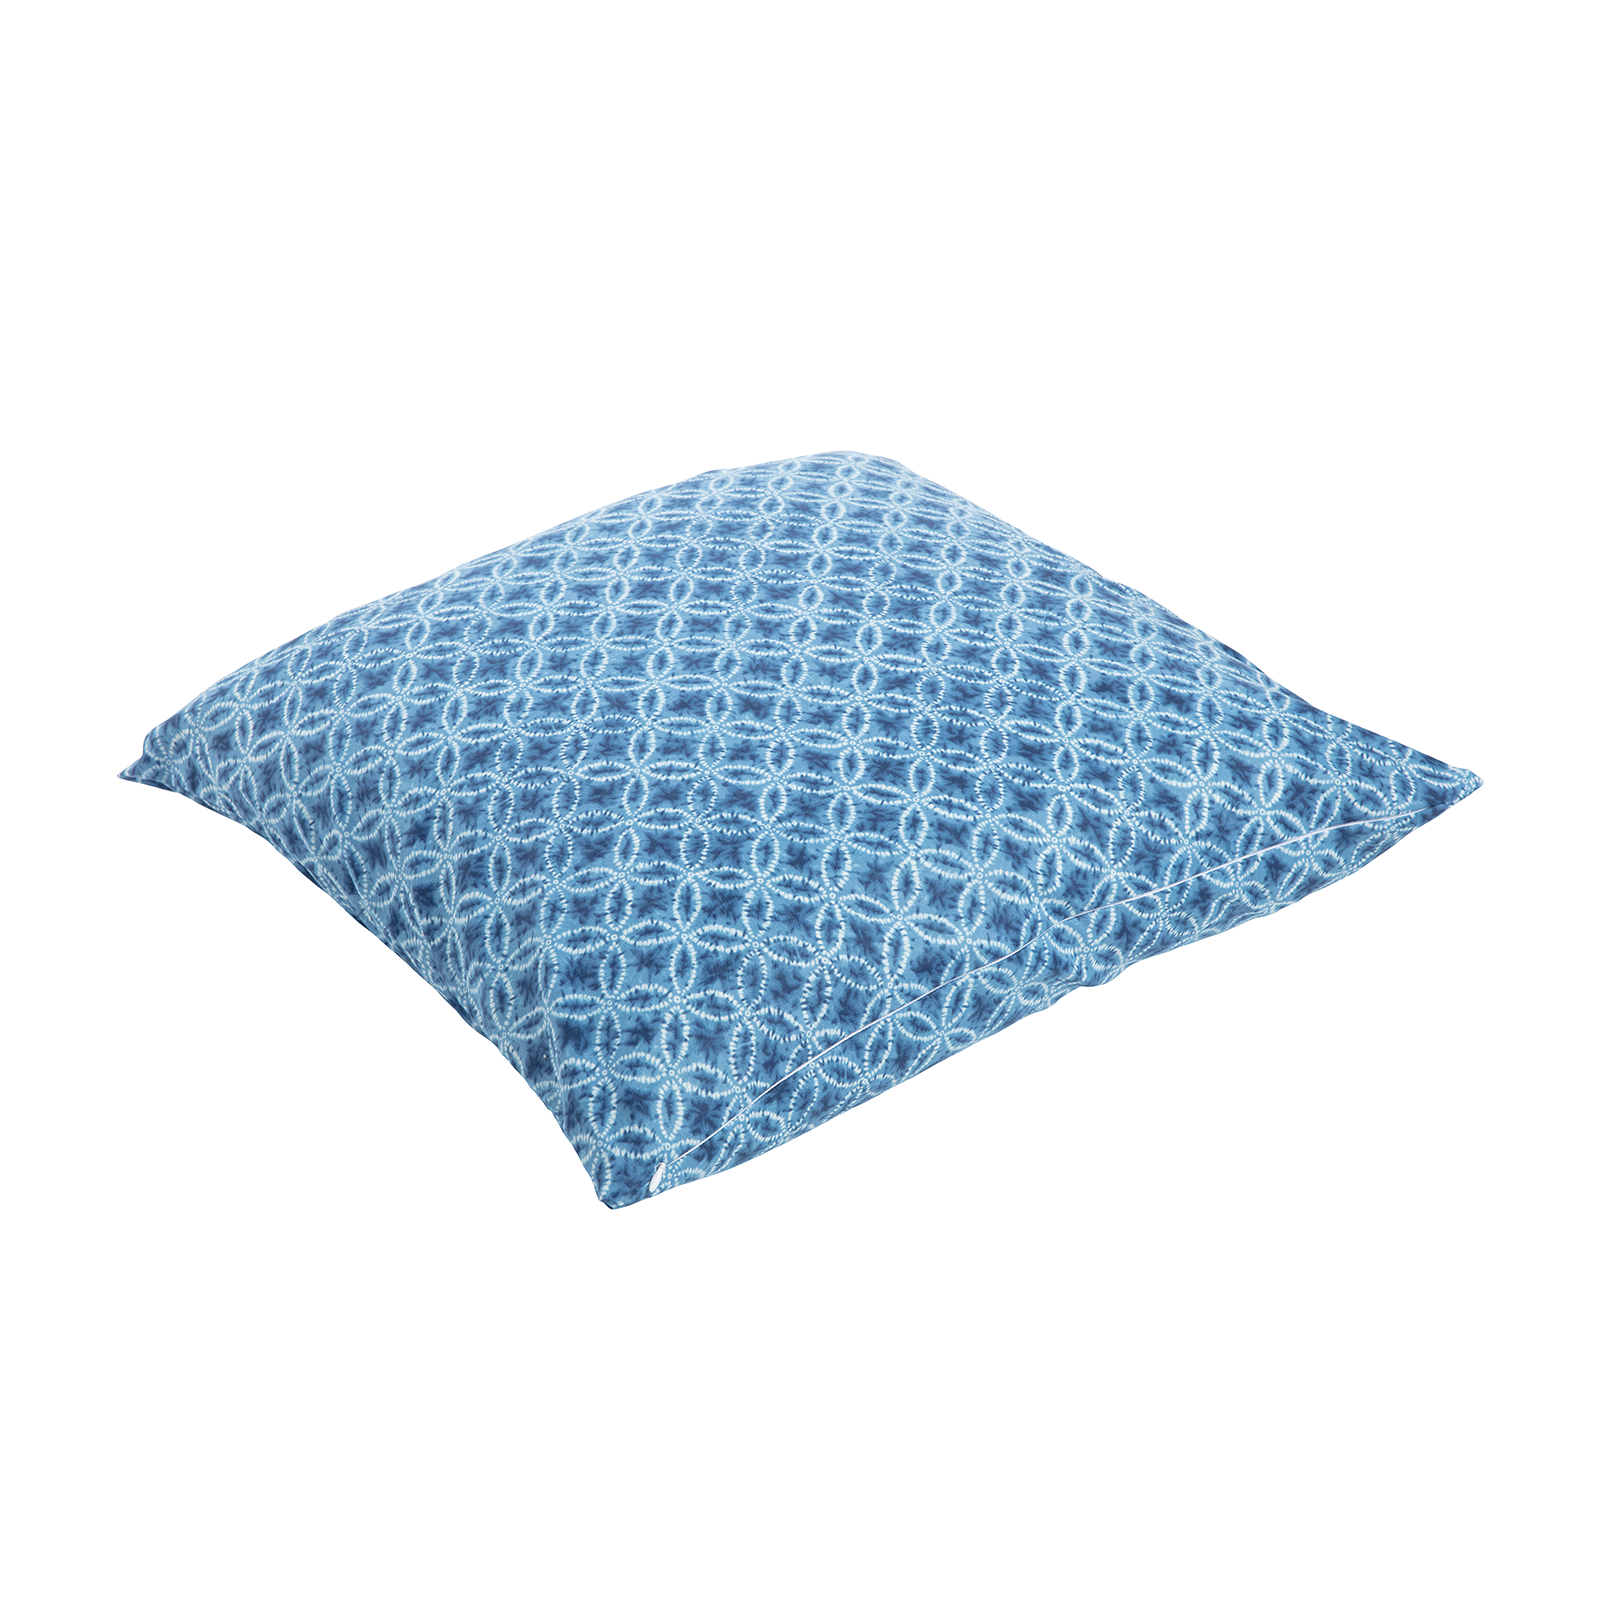 J-Life Taidai Blue Zabuton Floor Pillow